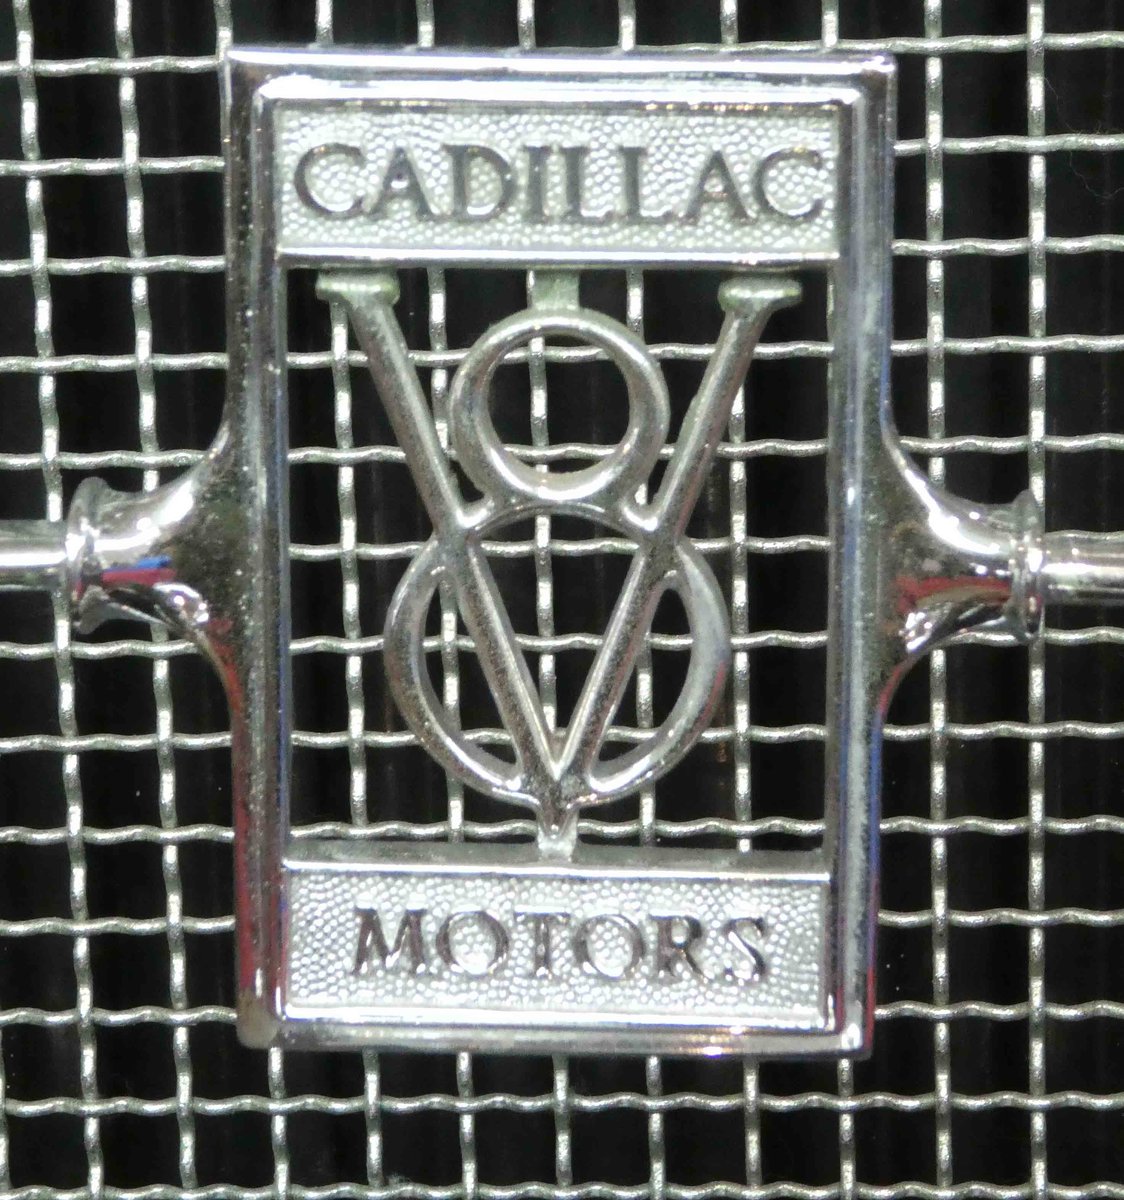 =Frontemblem des Cadillac 353 Fleetwood Roaster, Bj. 1930. 03-2019